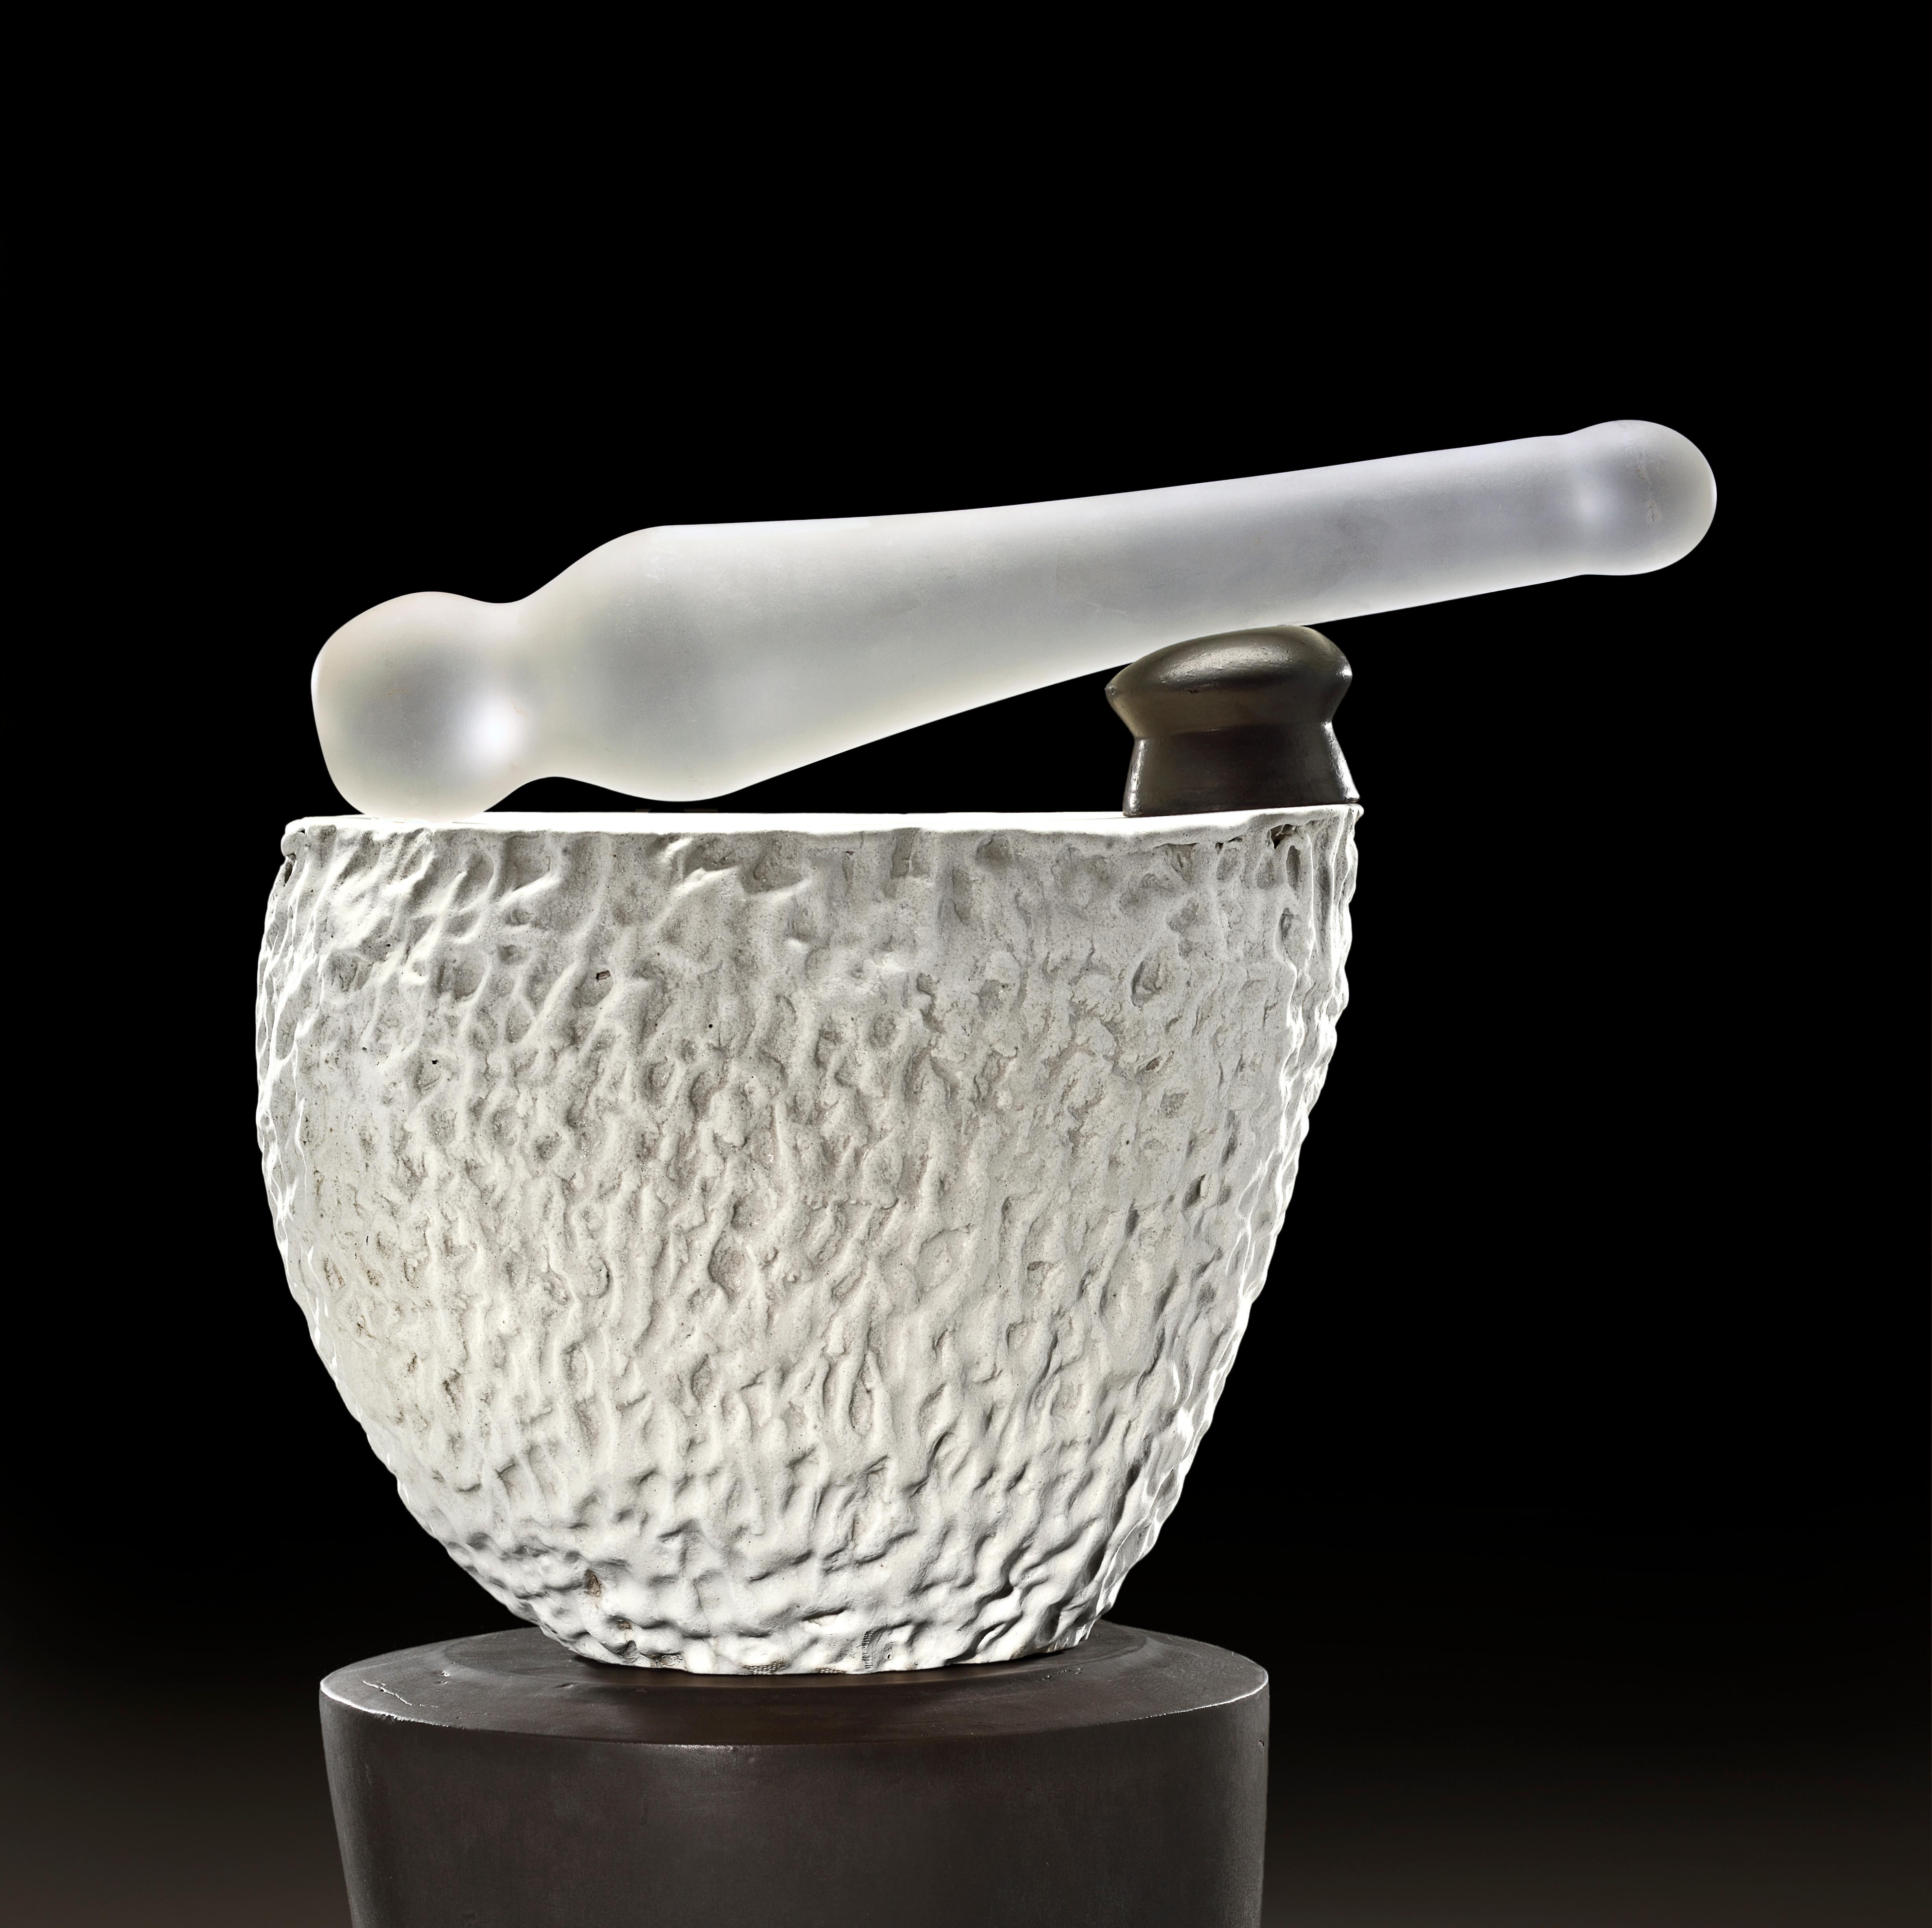 American Richard Hirsch Ceramic Mortar and Glass Pestle Sculpture #5, 2020 For Sale